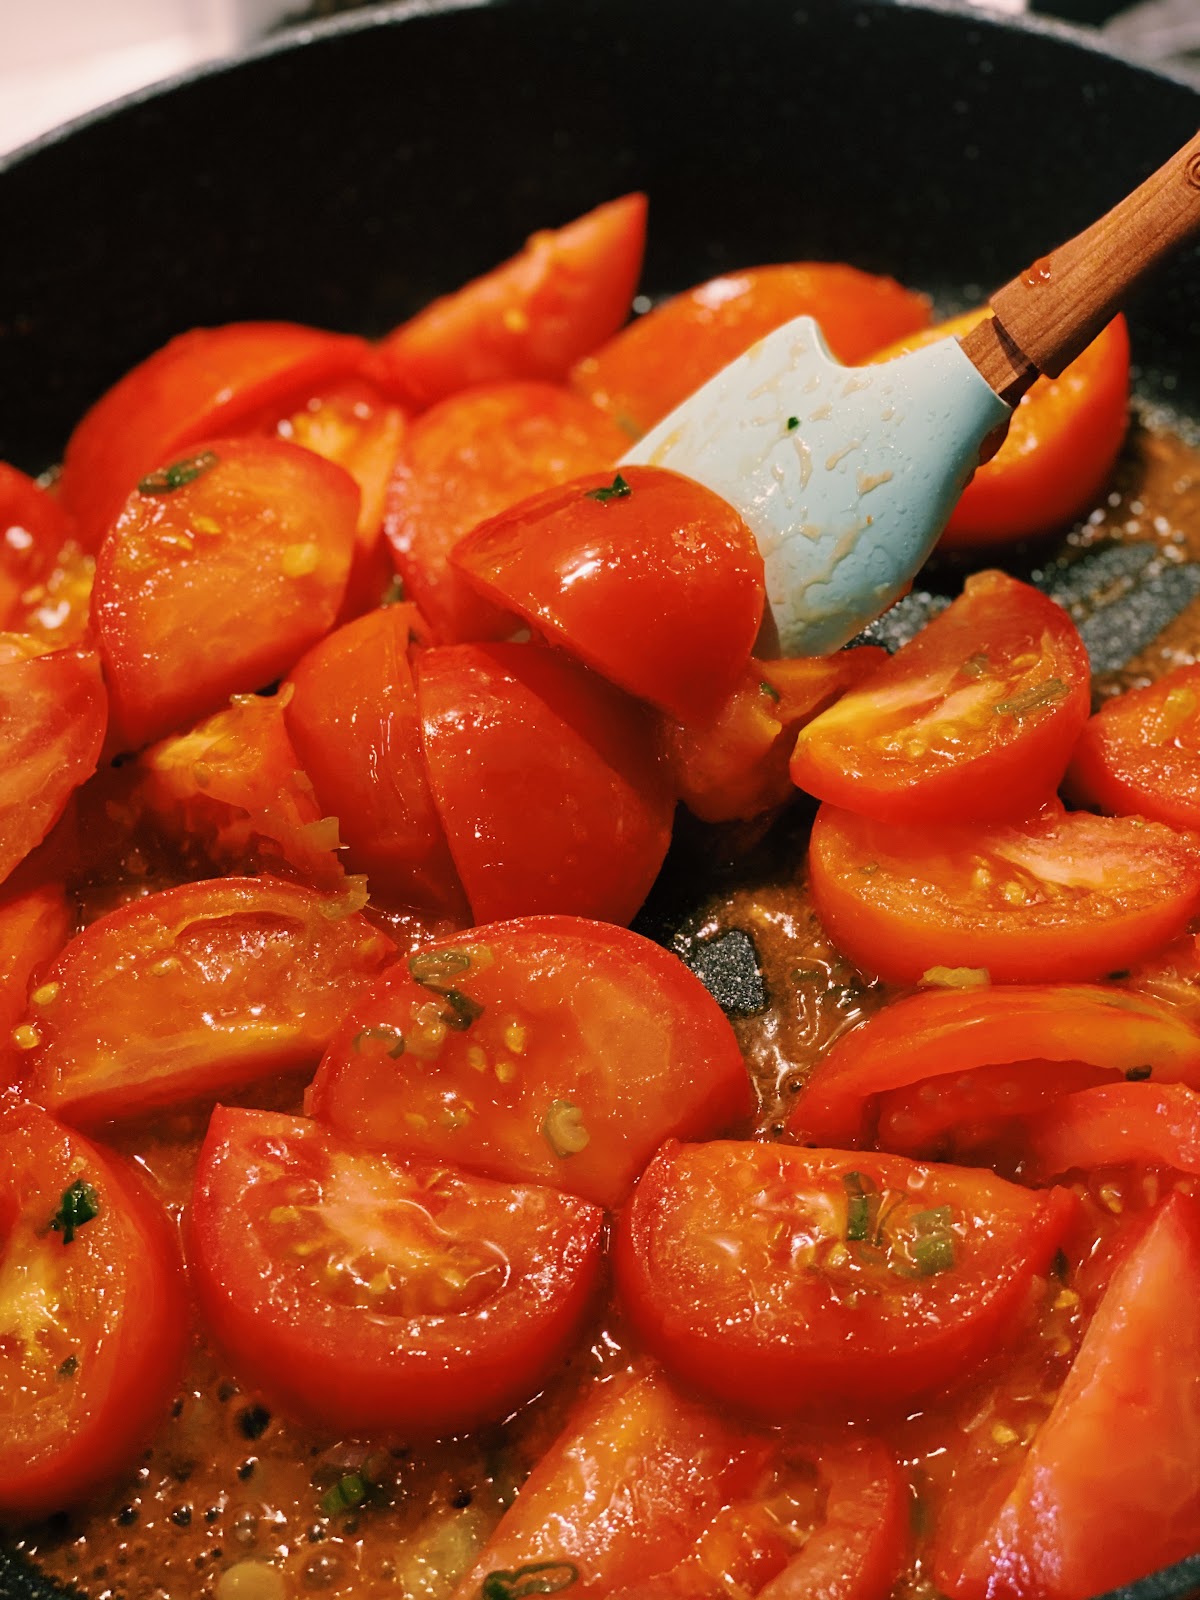 Tomato and Egg Stir-Fry